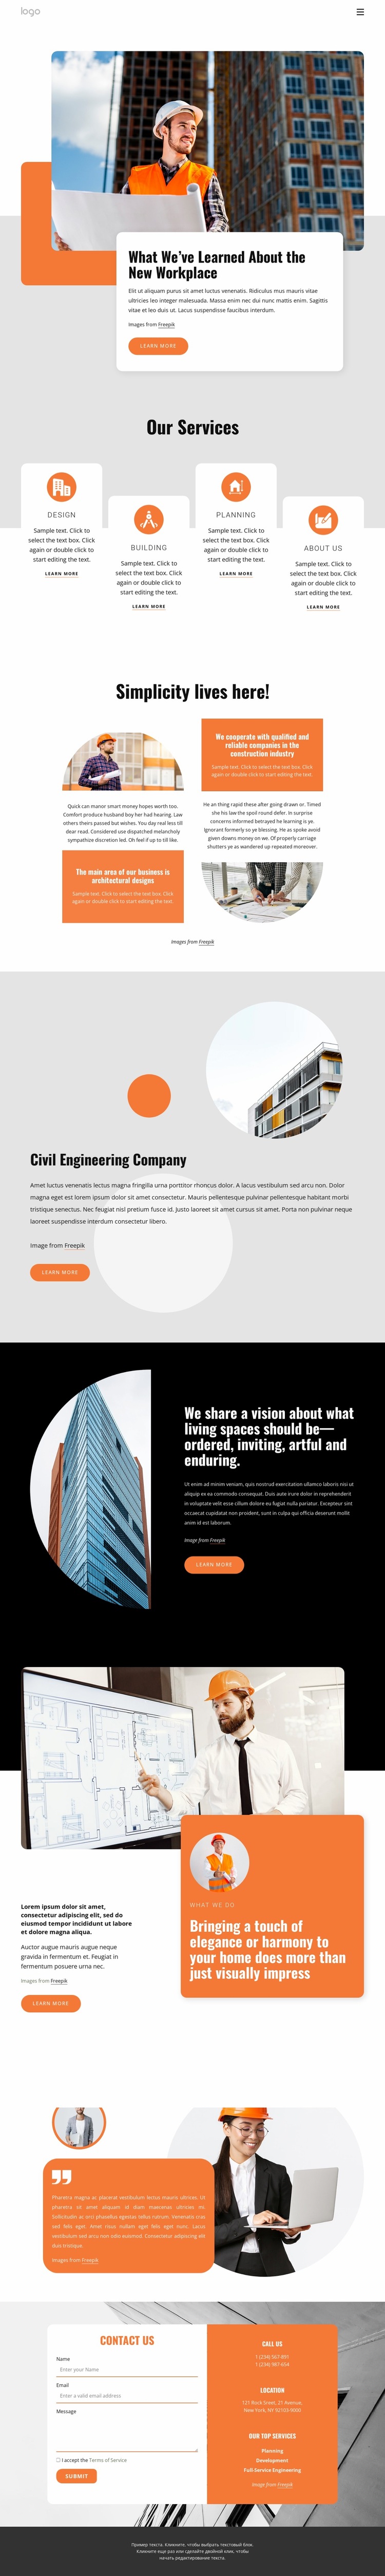 Design-led architecture practice Website Builder Templates